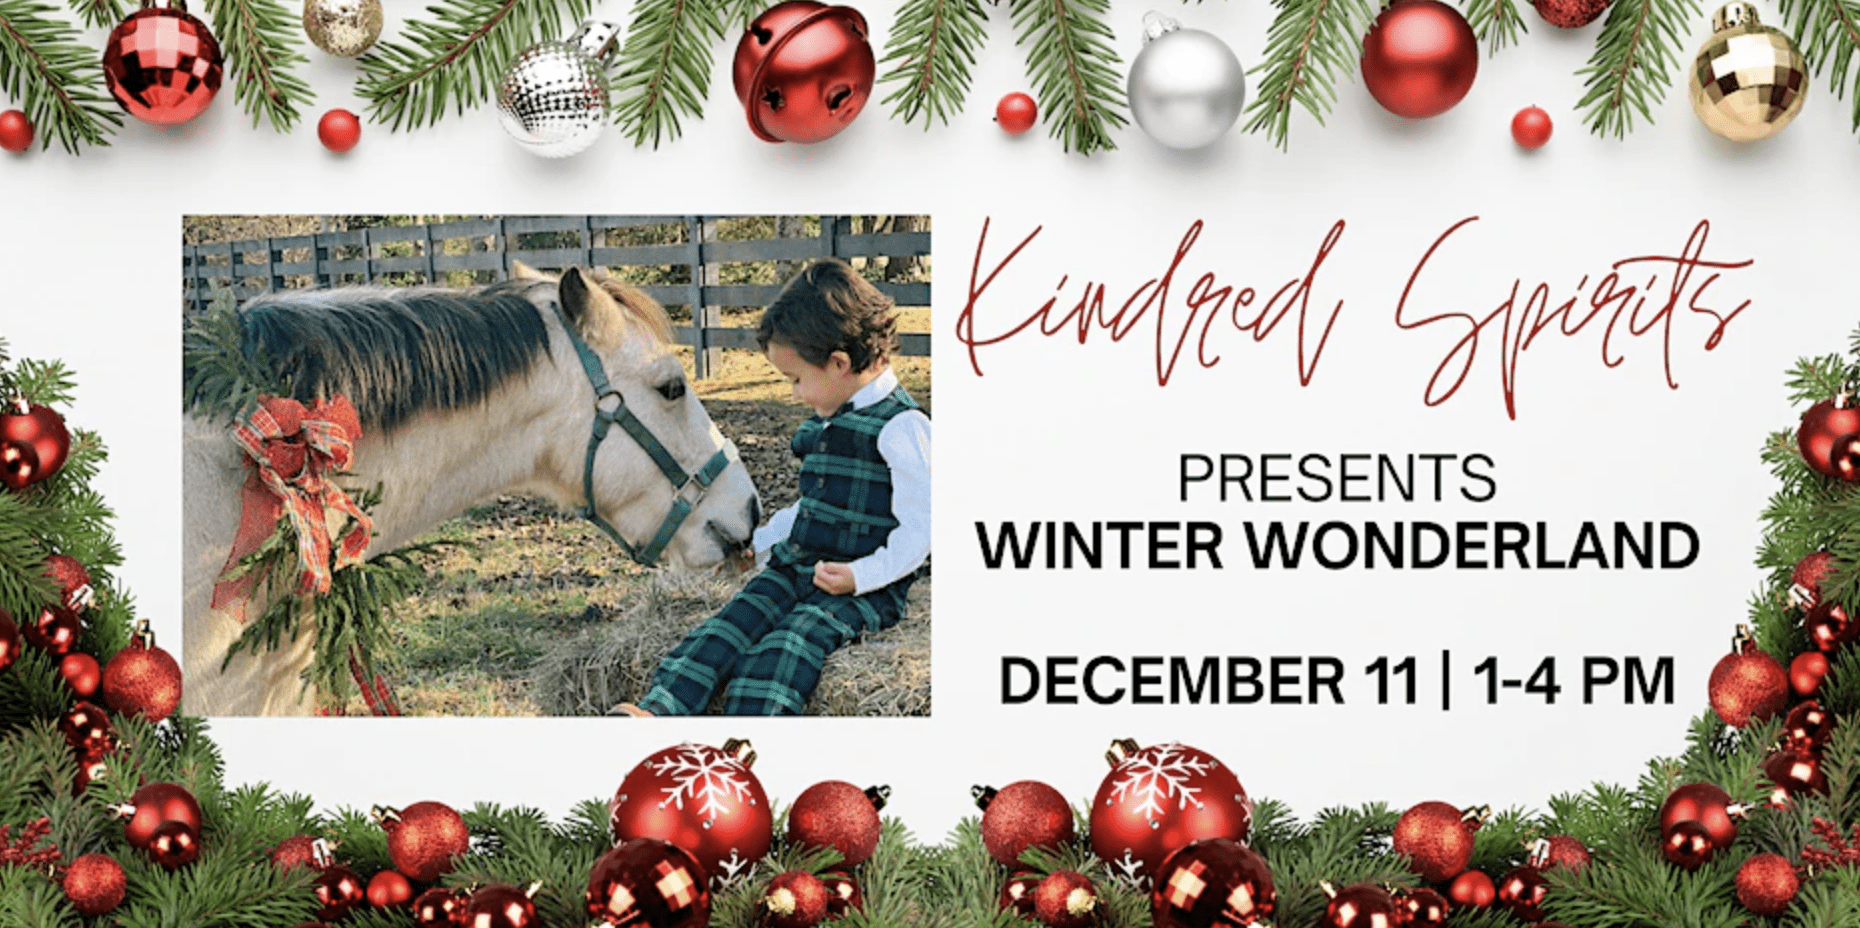 Kindred Spirits Farm Winter Wonderland event in Franklin, TN.